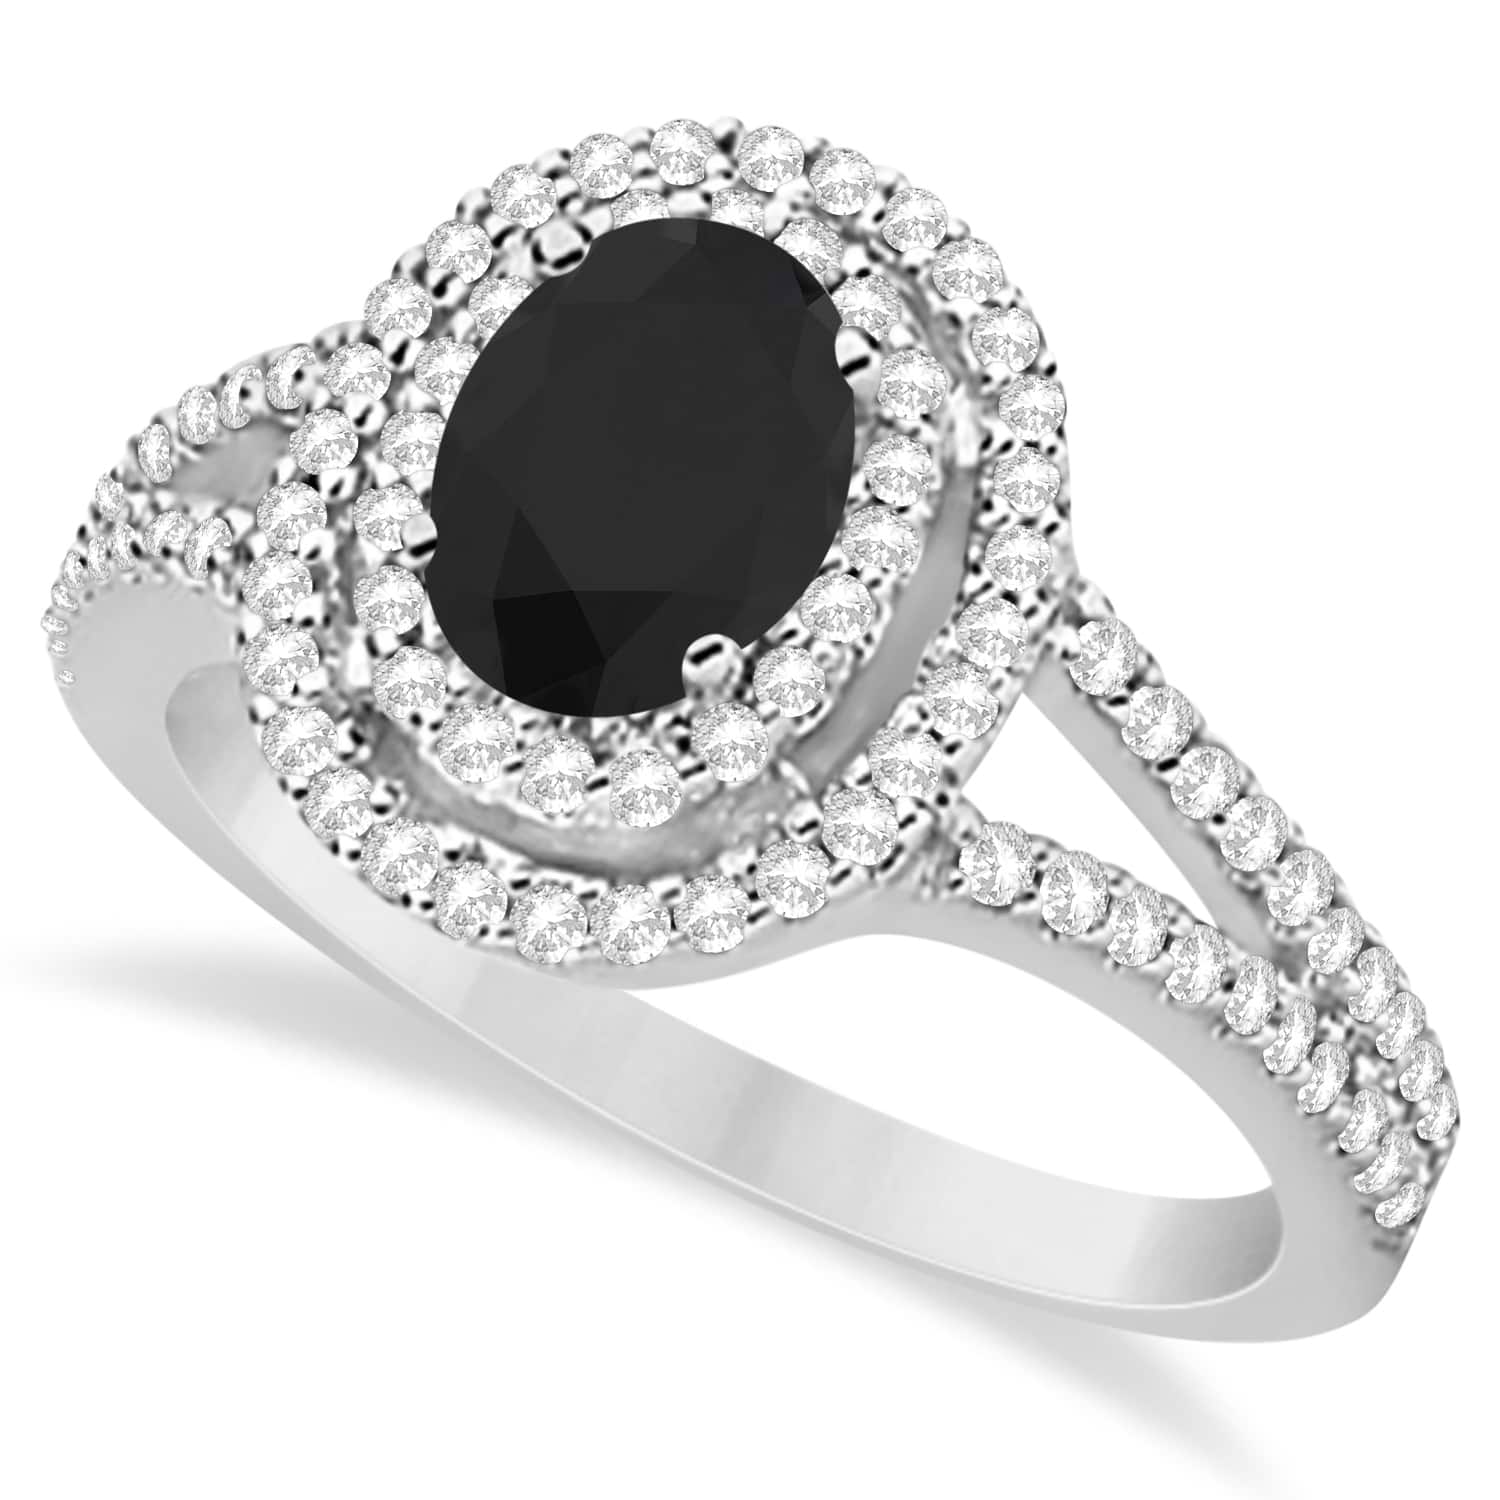 Double Halo Diamond & Black Diamond Engagement Ring 14K White Gold 1.34ctw